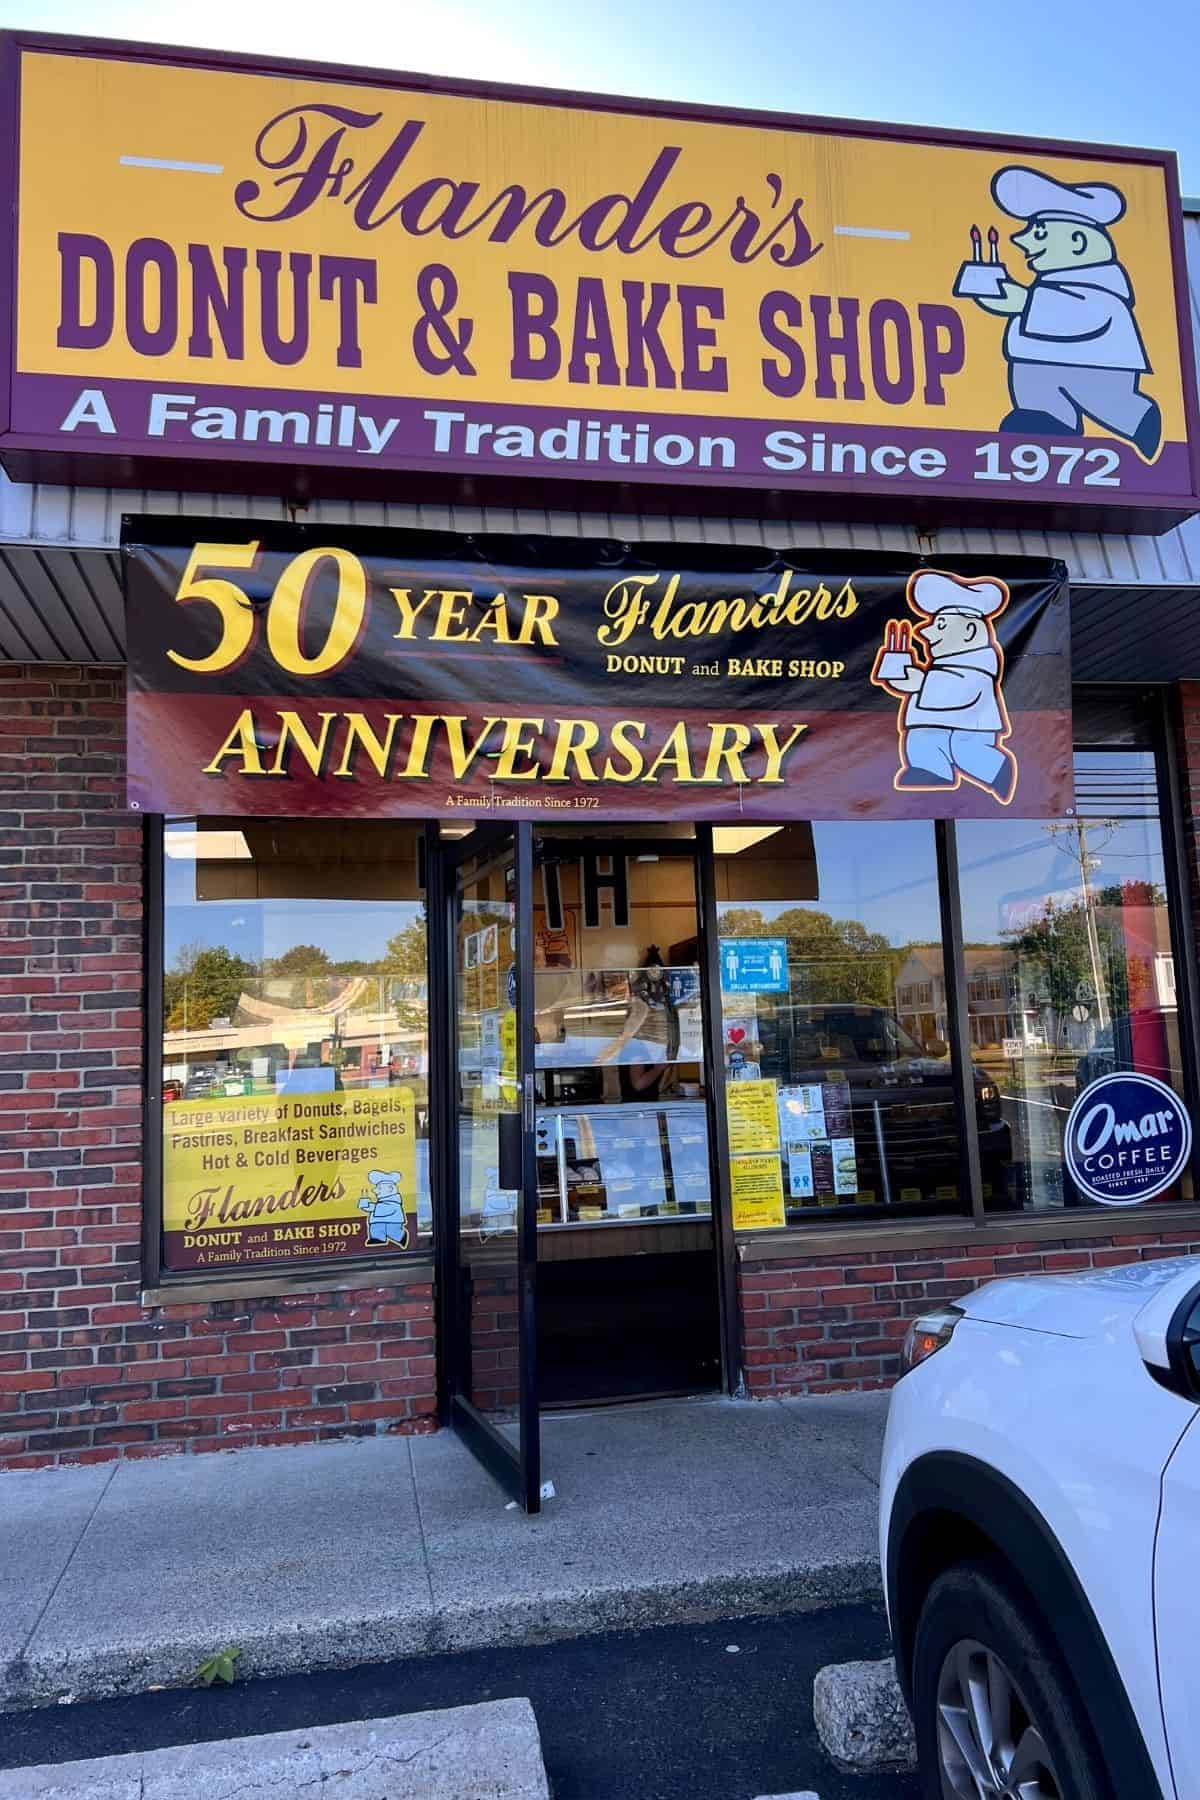 flanders donut shop store front.